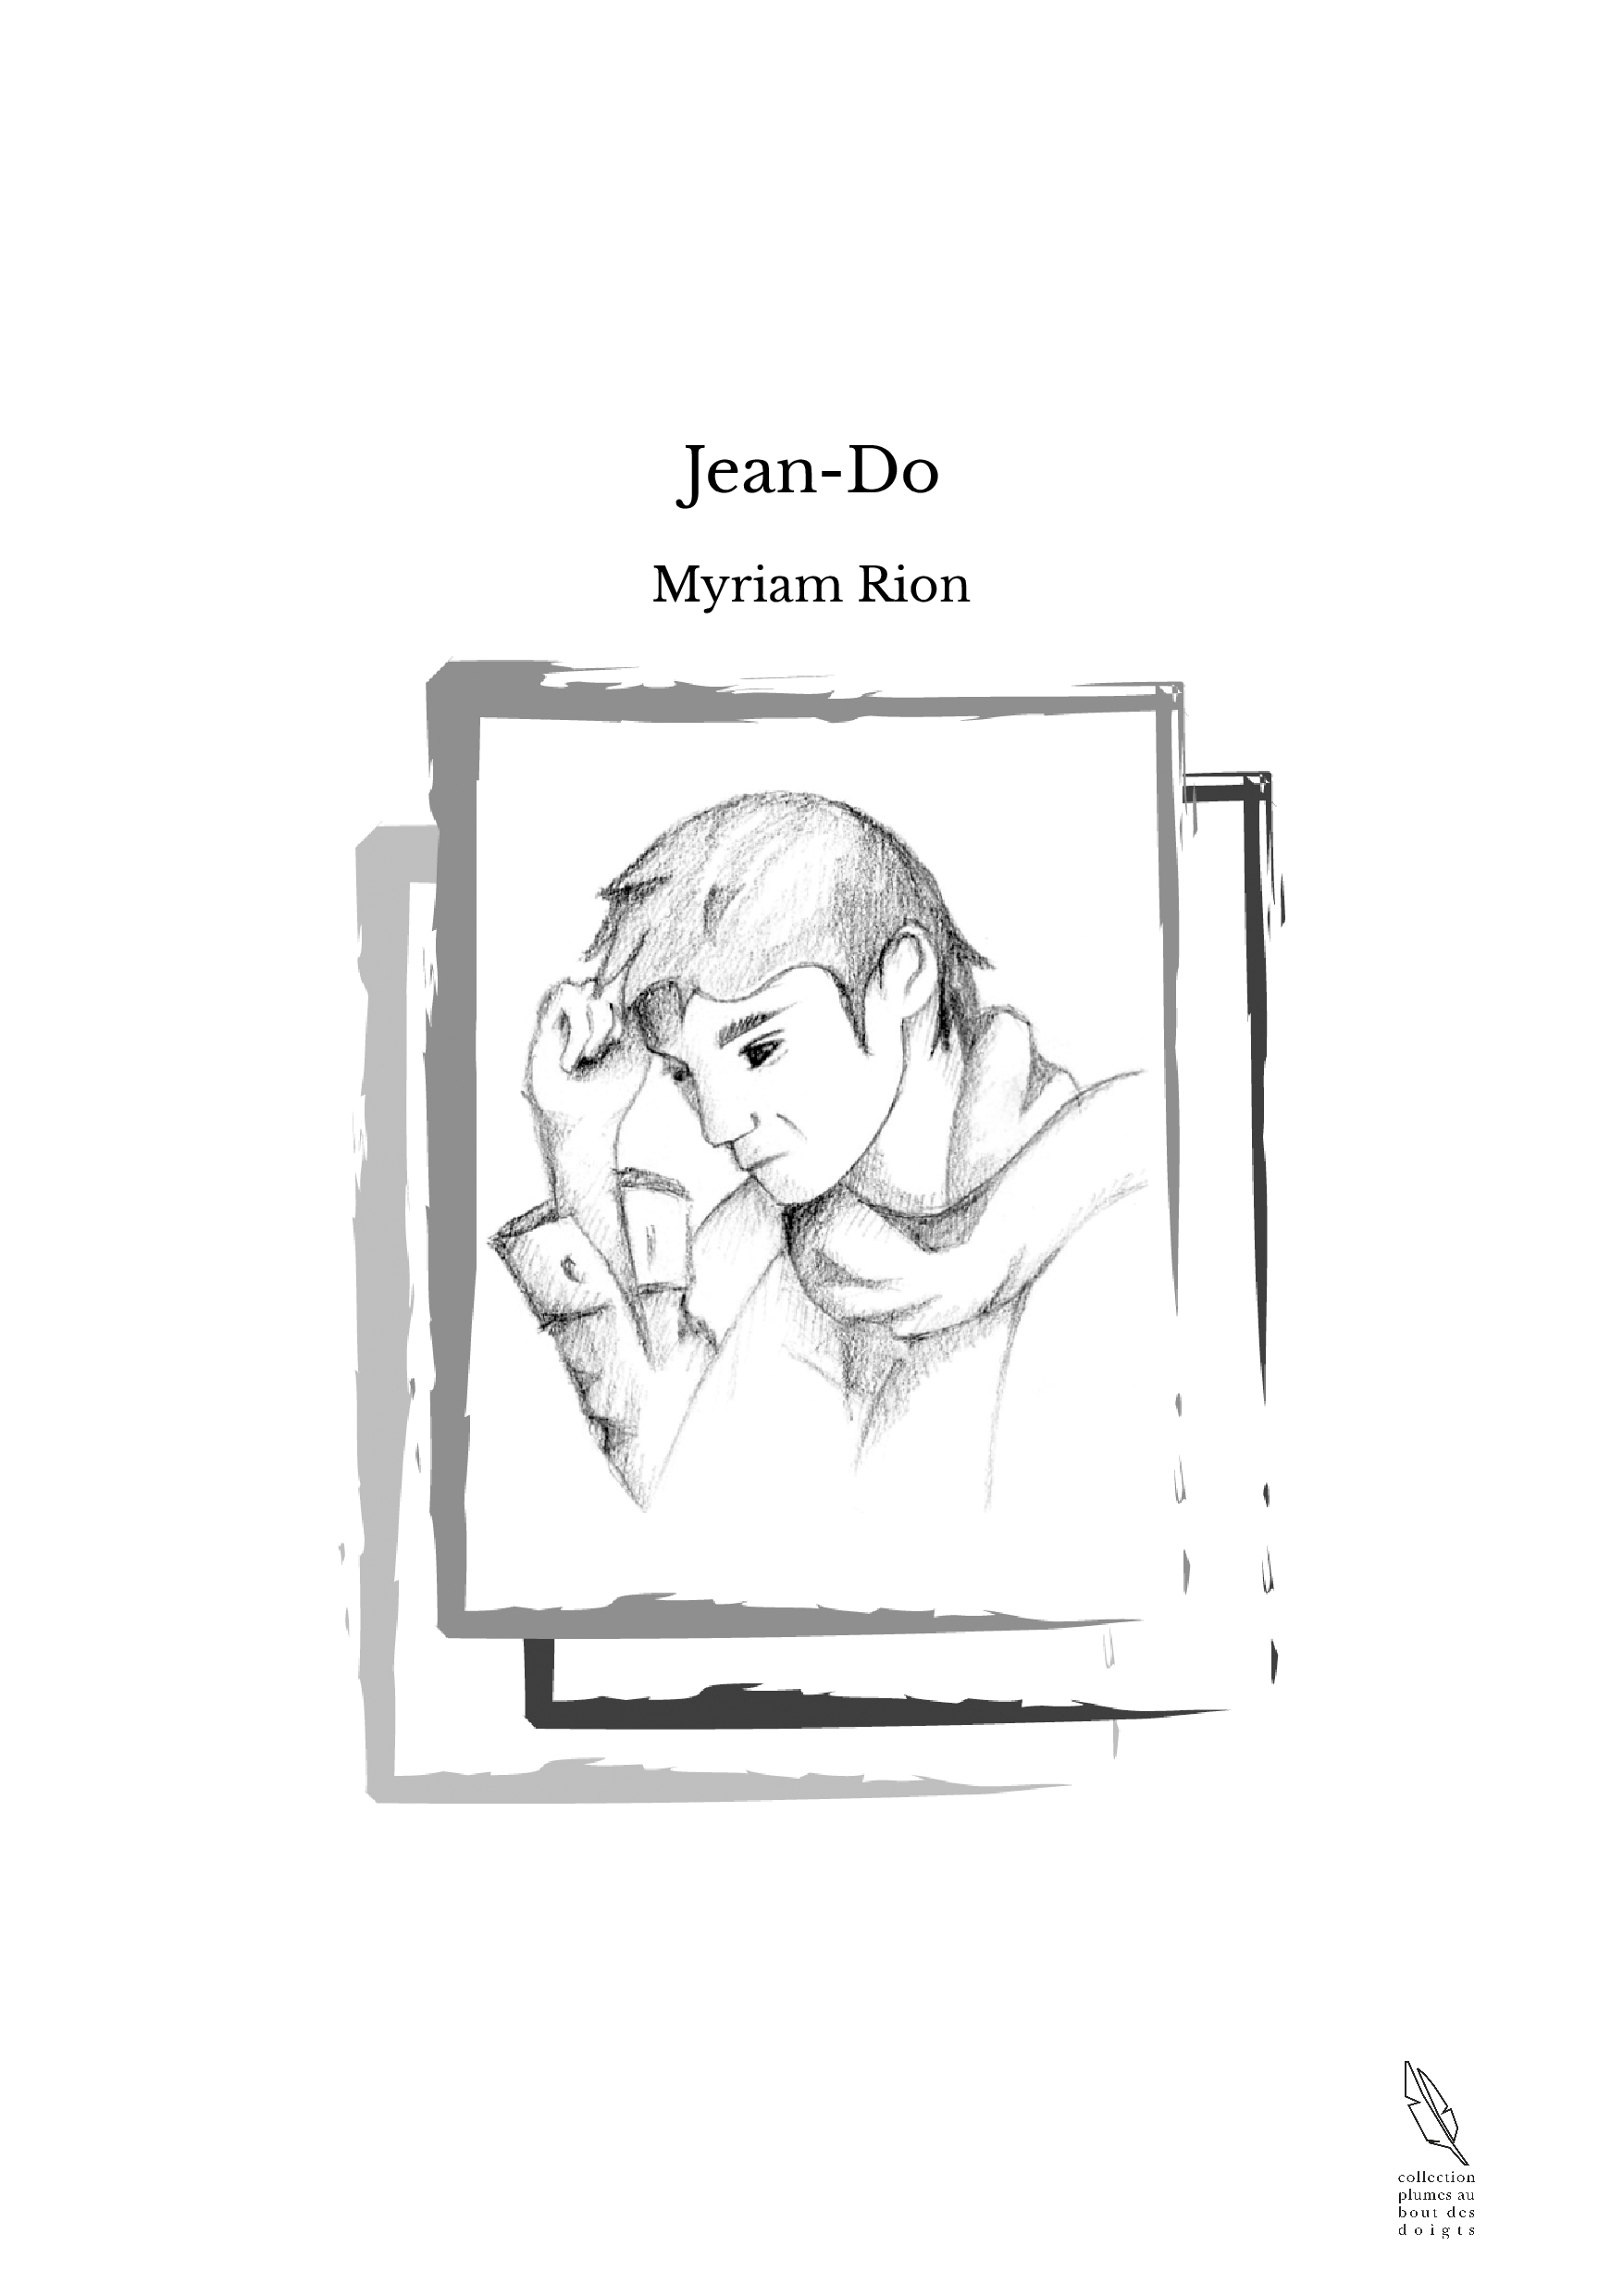 Jean-Do